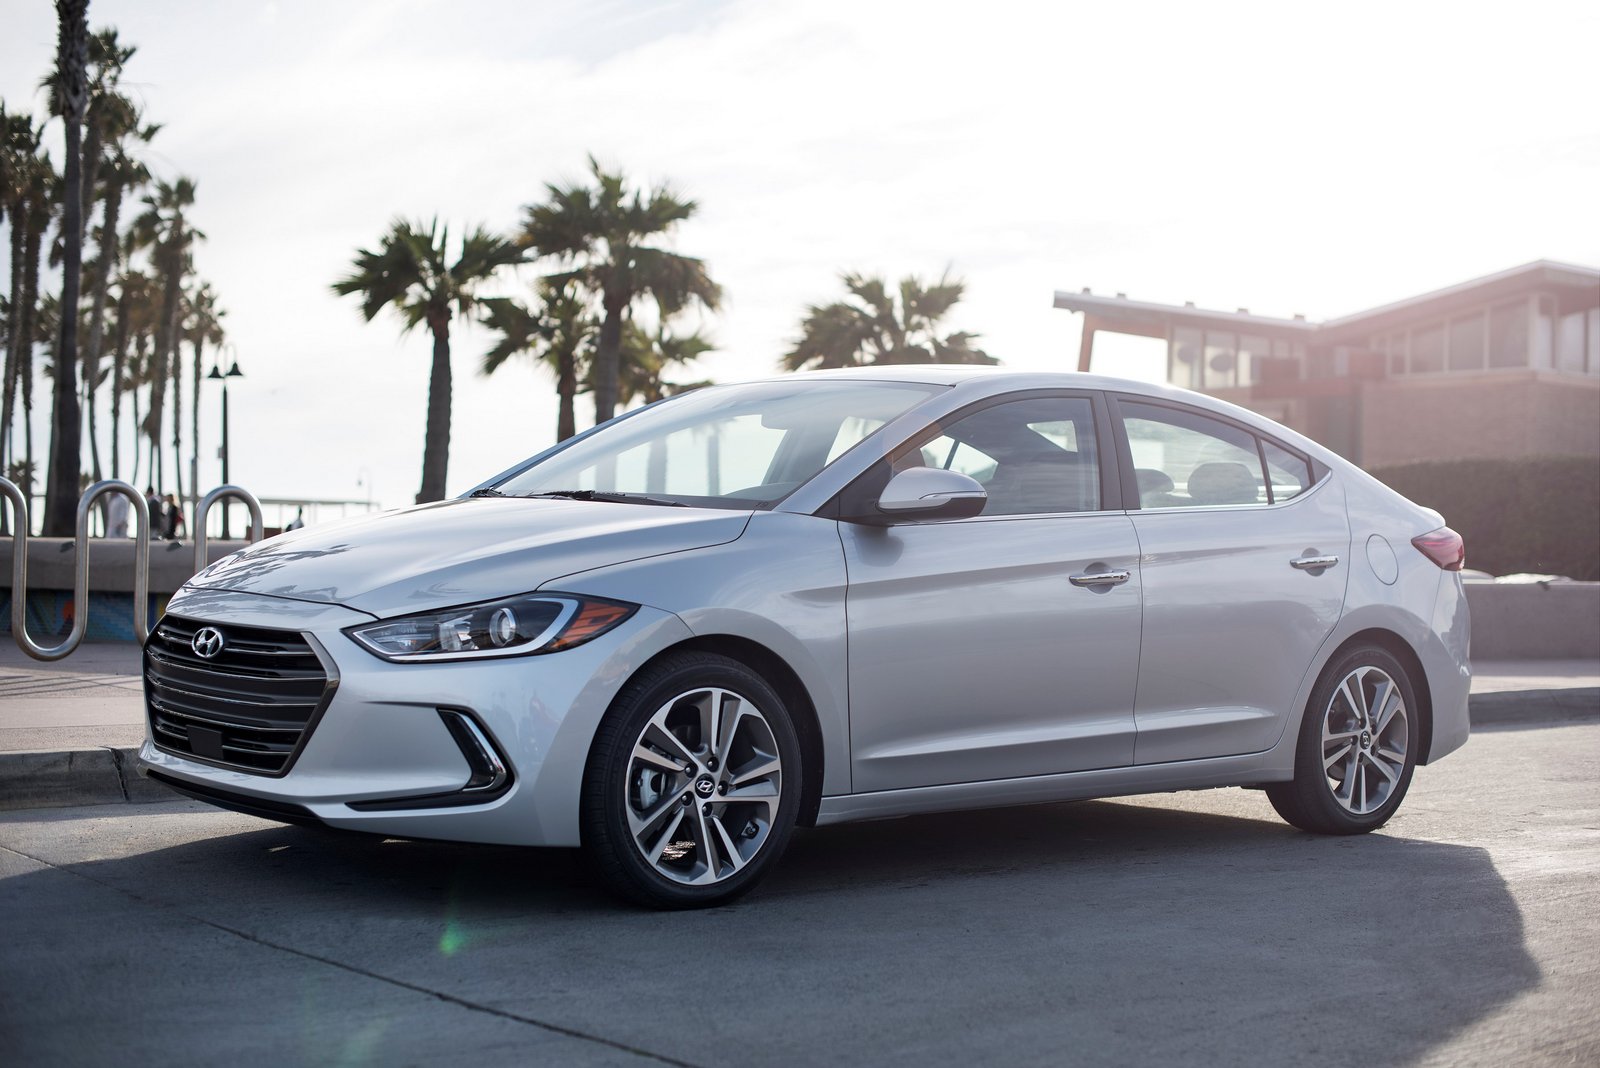 Hyundai Updates Elantra For MY 2018, Adds SEL Trim Level - autoevolution